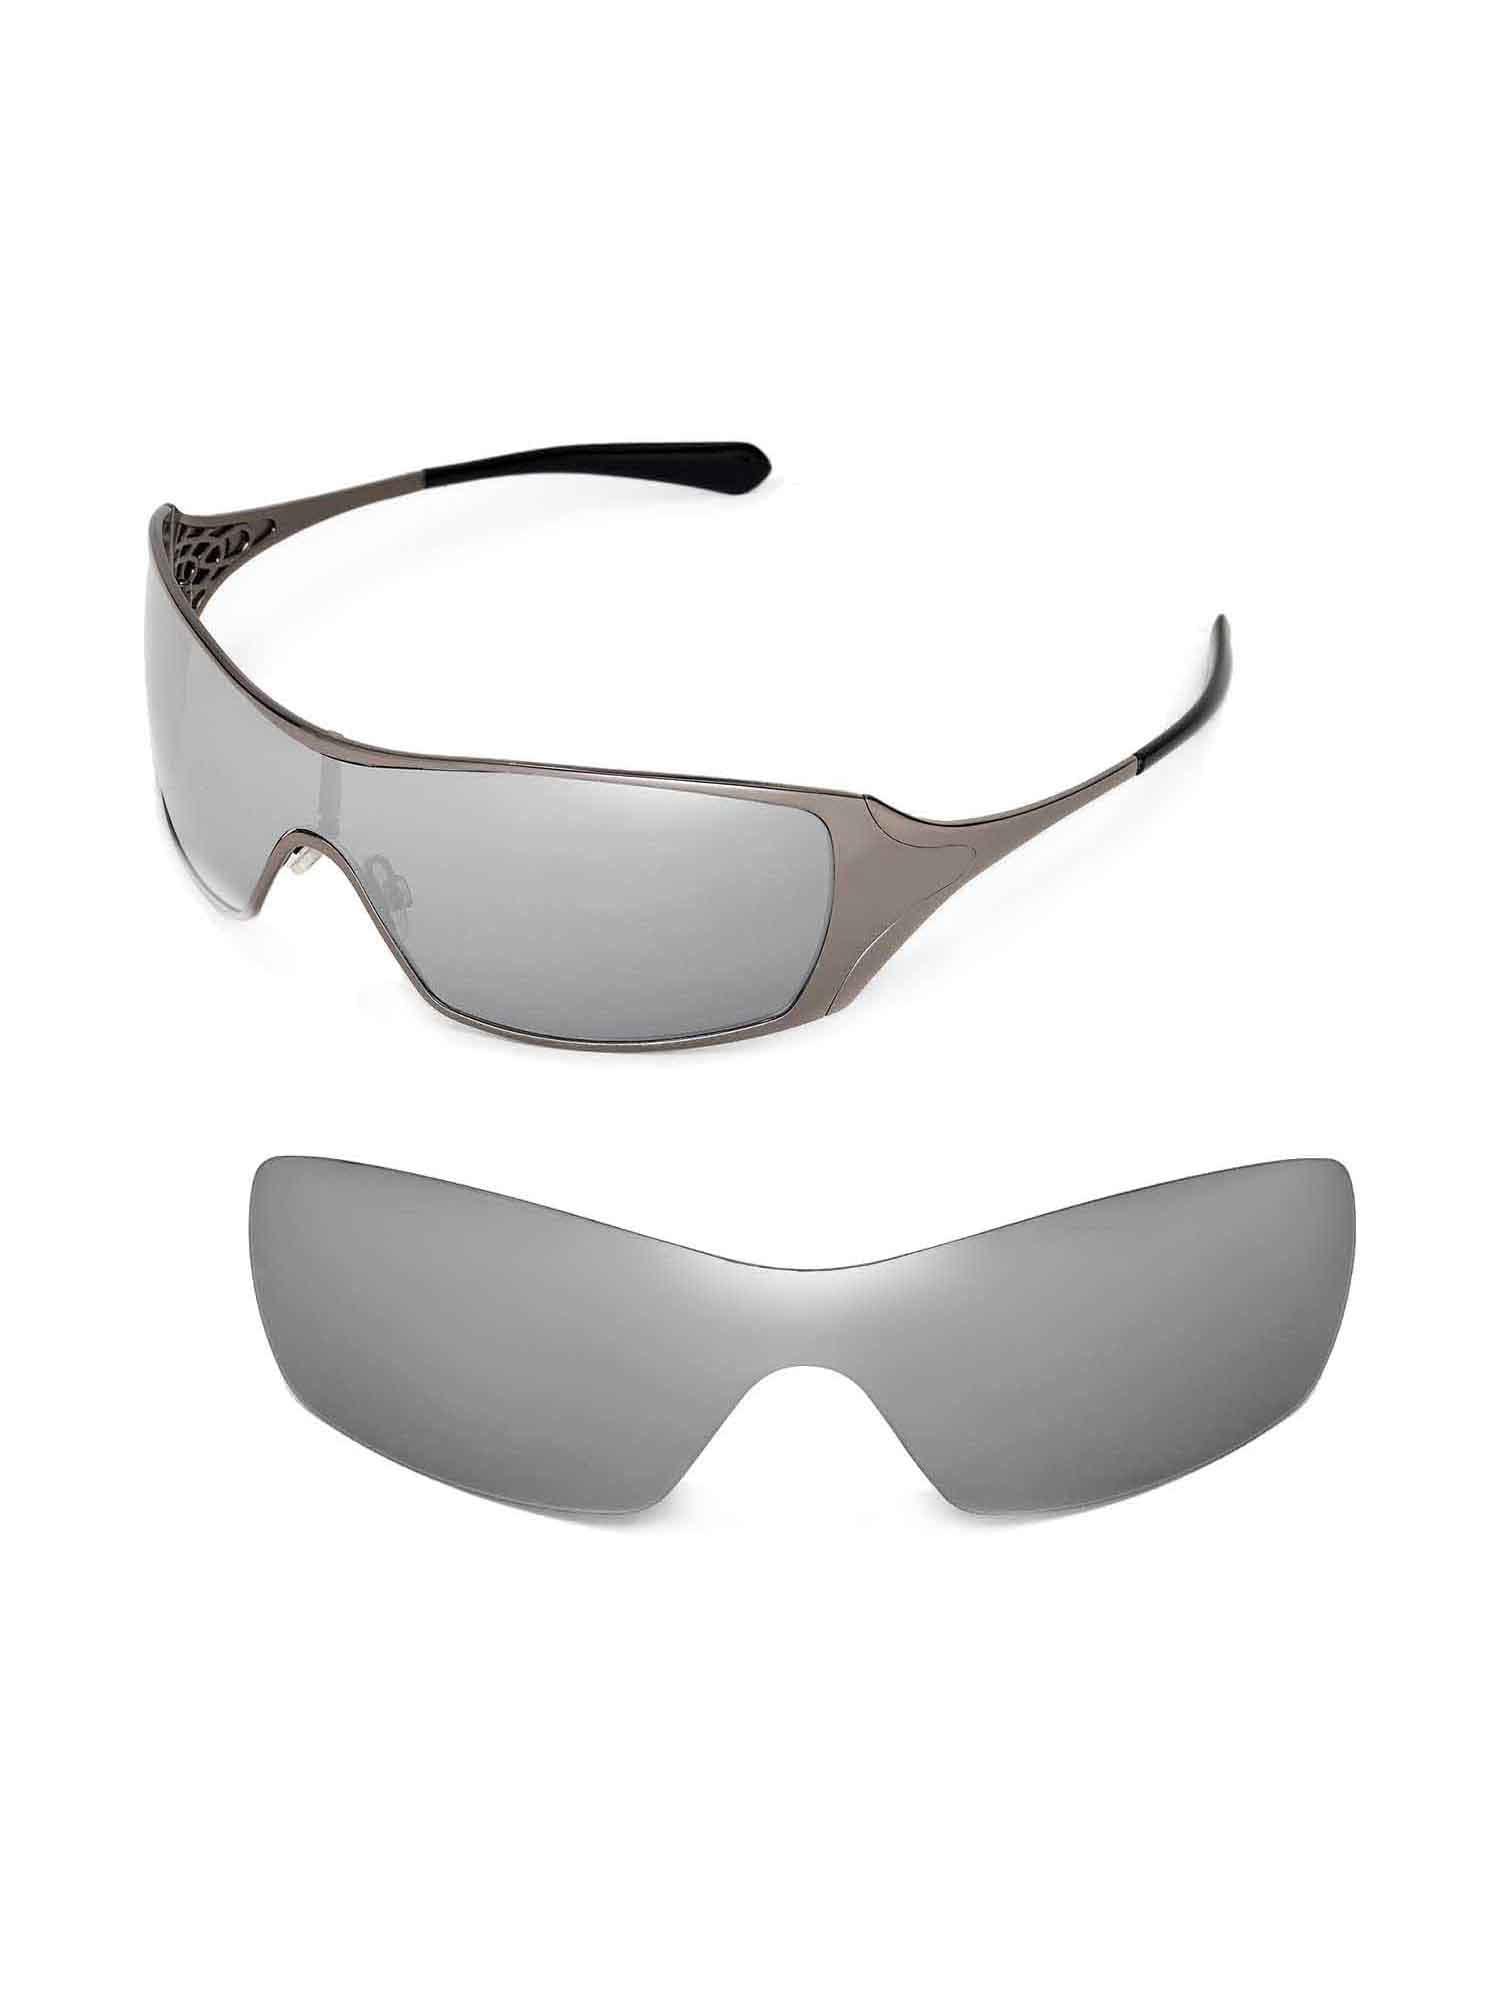 Walleva 24K Polarized Replacement Lenses for Oakley Dart Sunglasses - Walmart.com